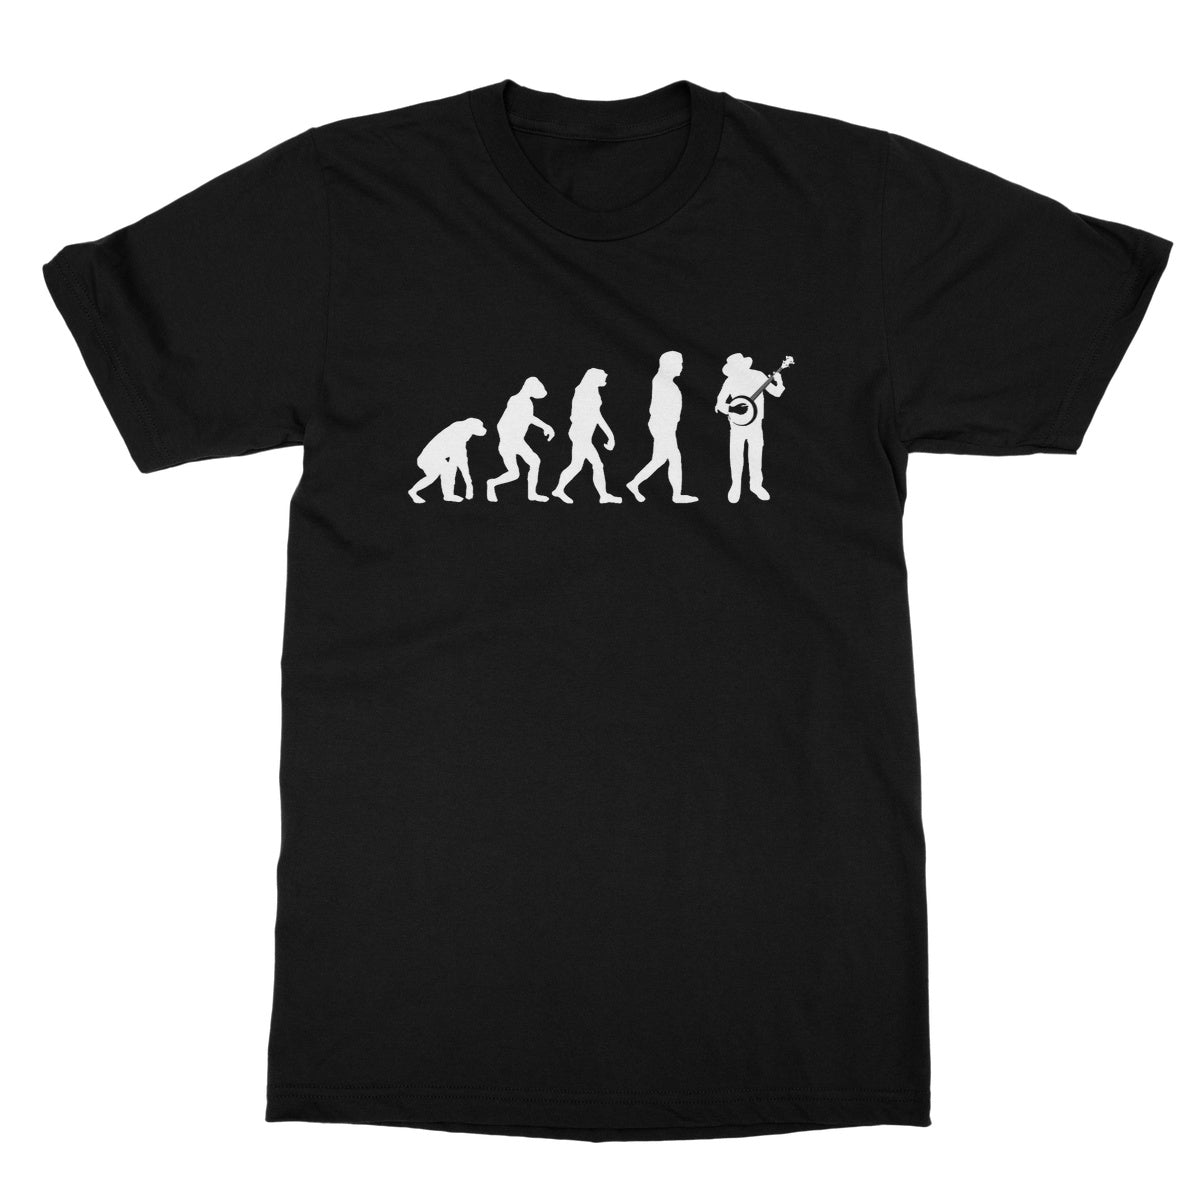 Evolution of Banjo Players T-Shirt